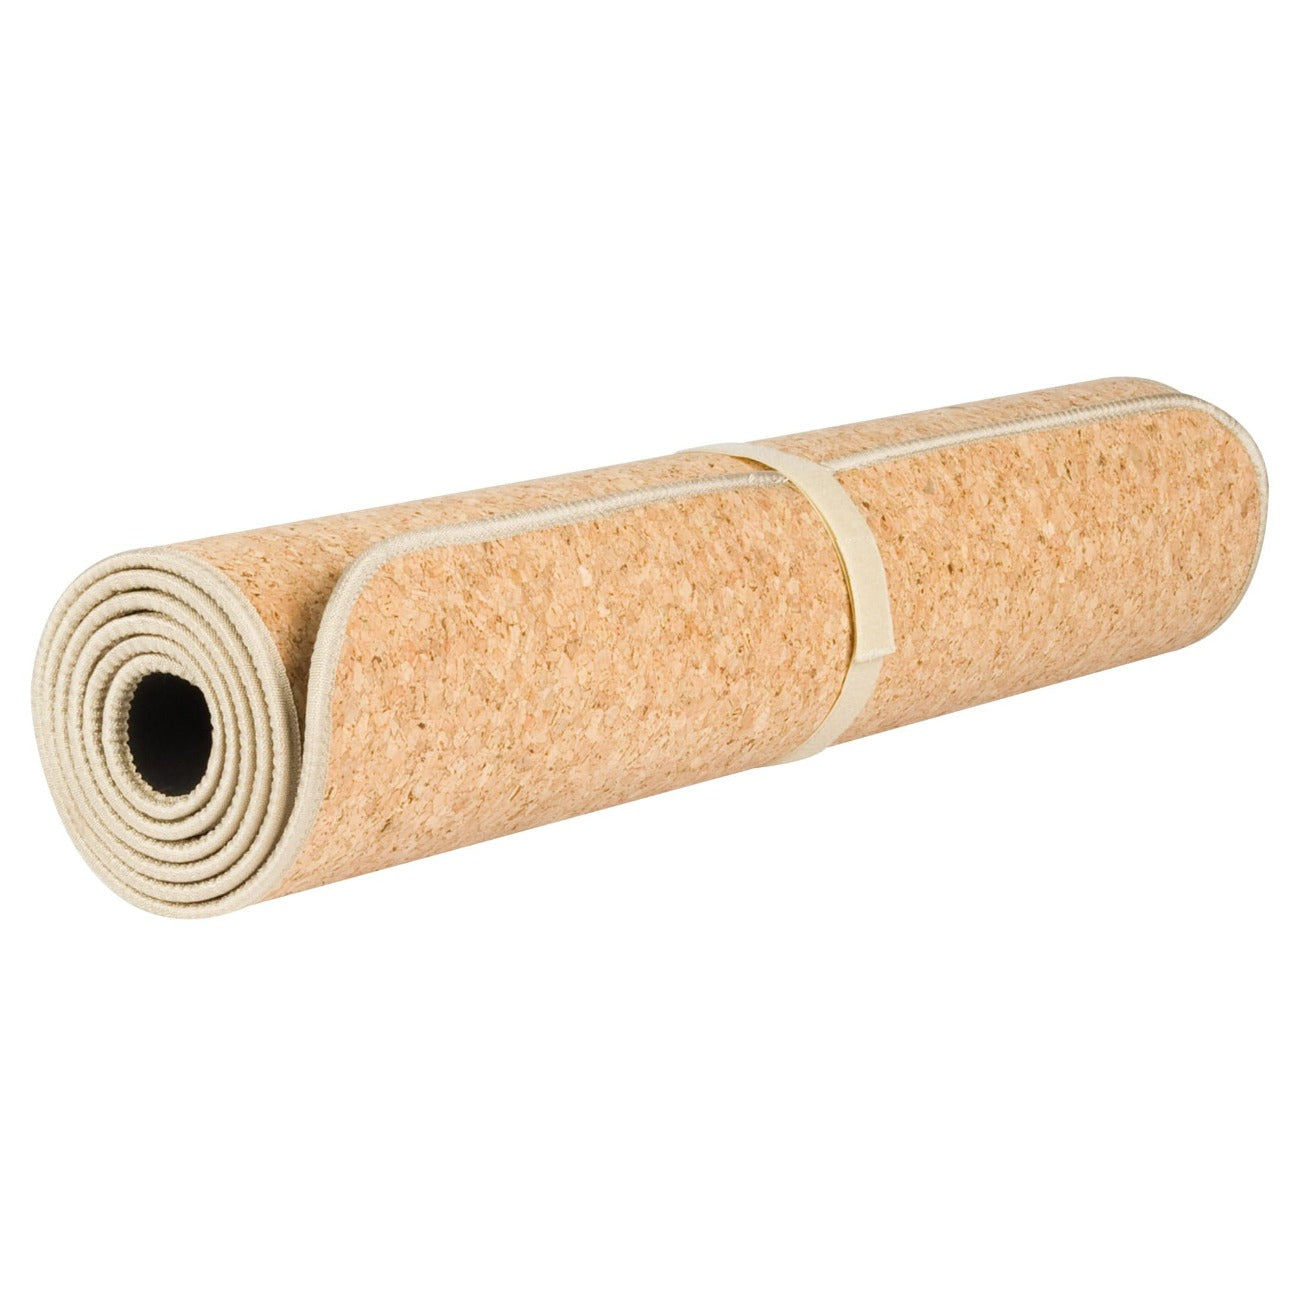 Cork Yoga Mat 